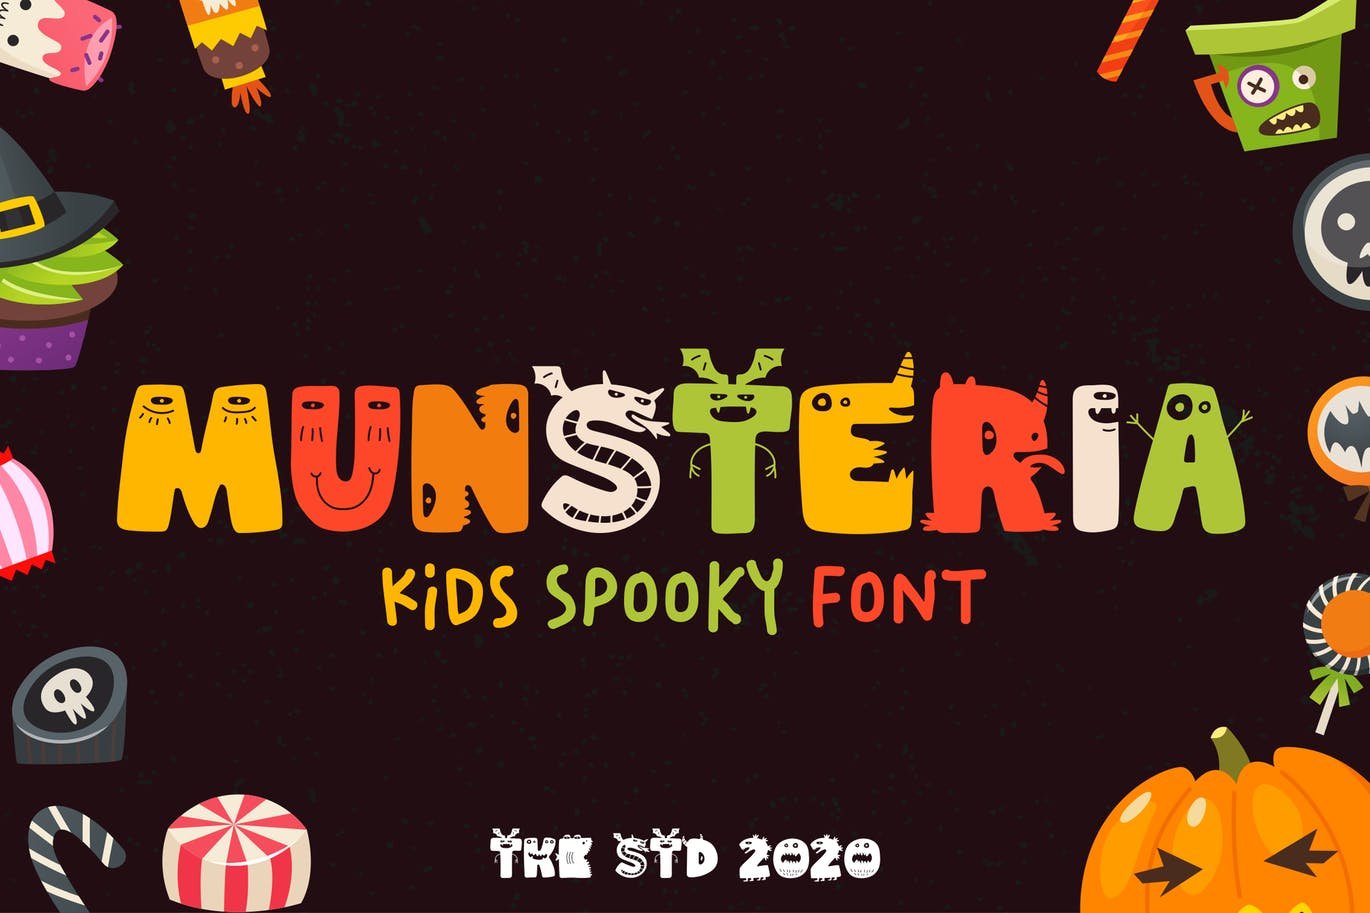 munsteria kids funny monster font 1 549